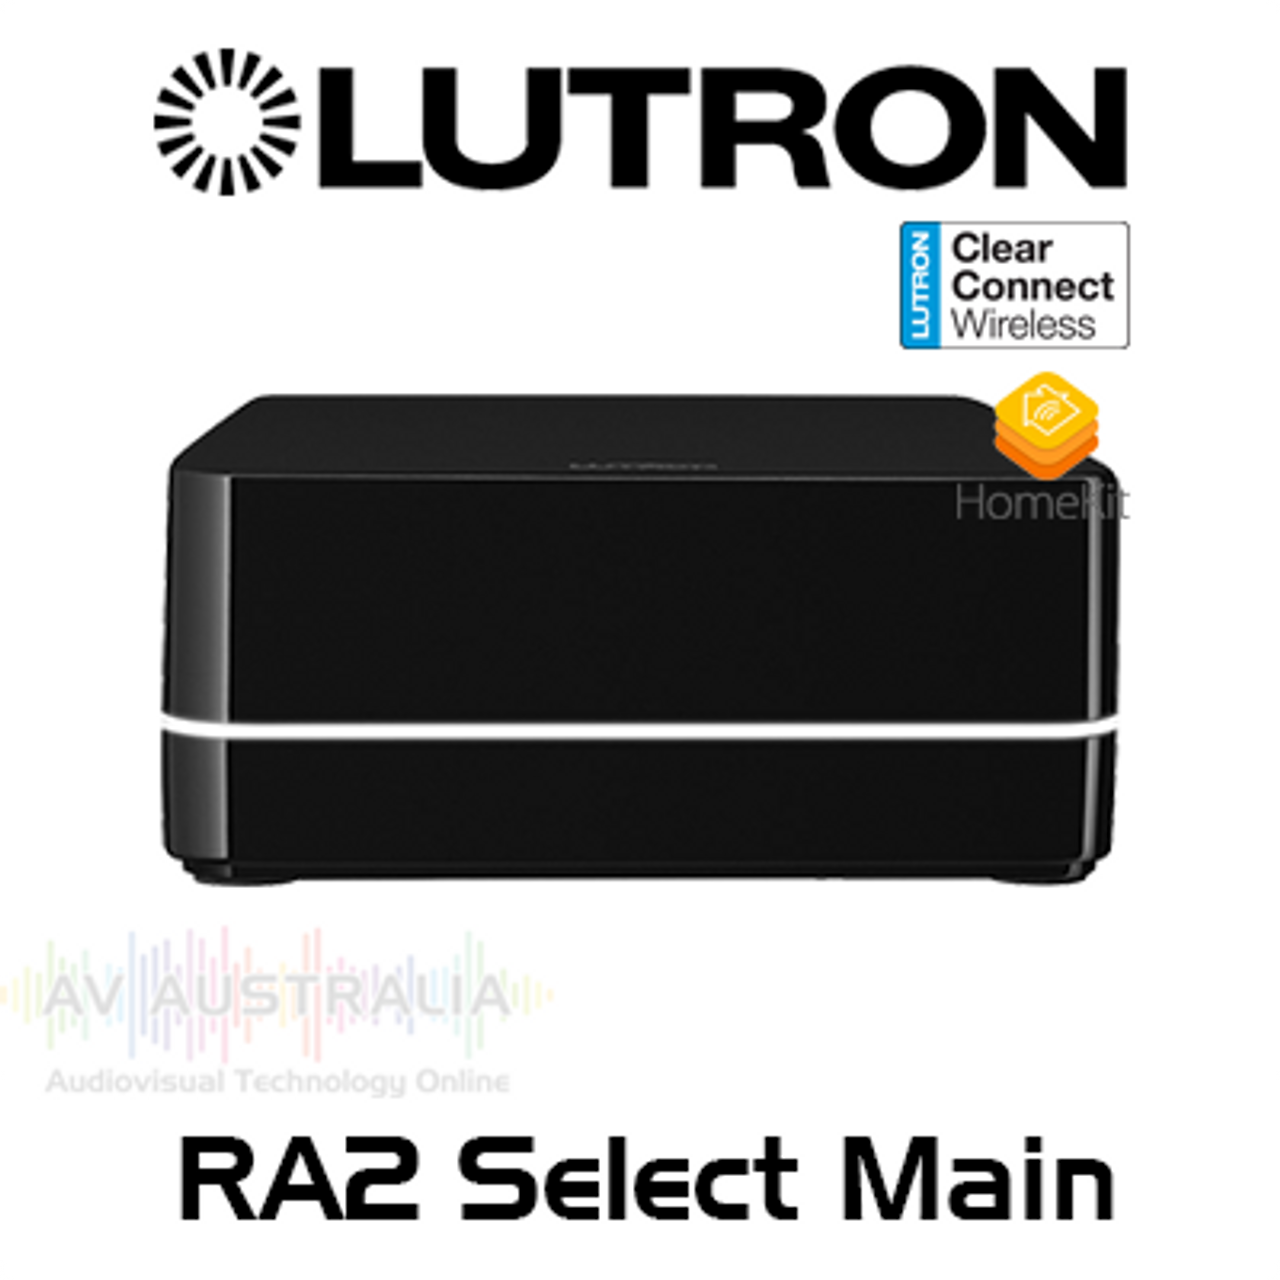 Lutron RA2 Select Main Repeater